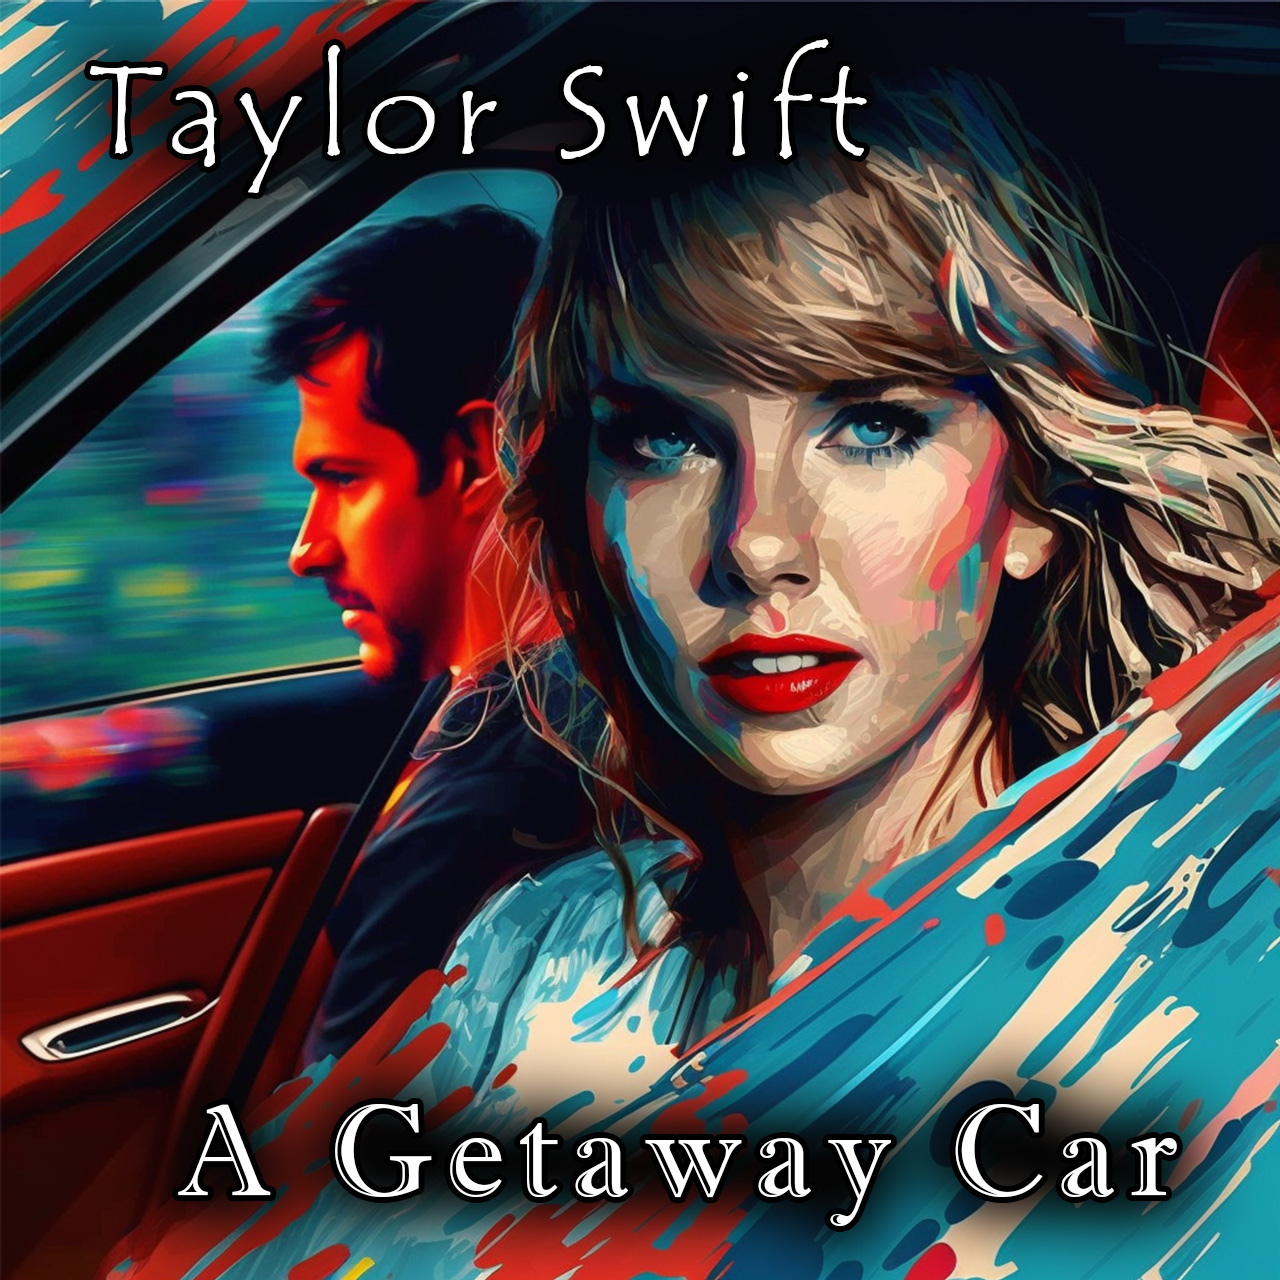 Getaway Car Red Taylor Swift Digital Art Print